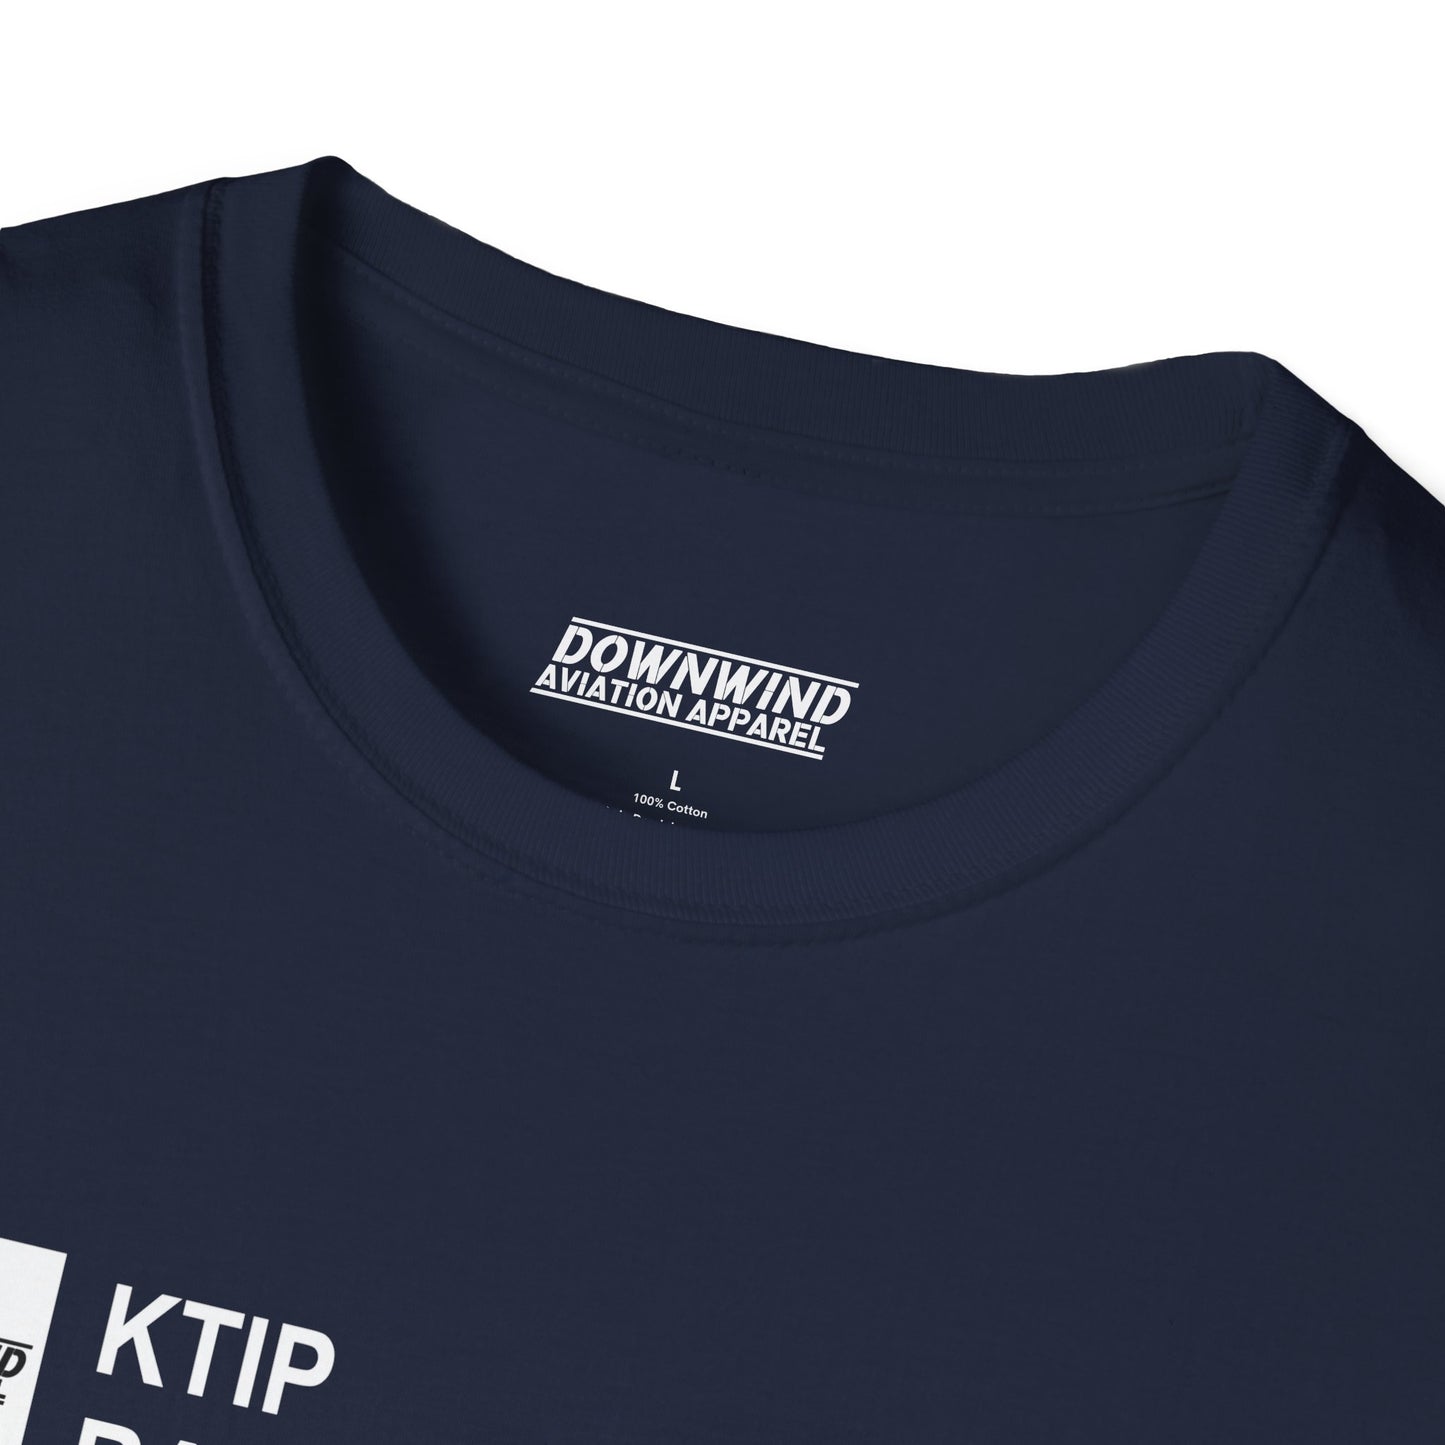 KTIP / Rantoul Airport T-Shirt